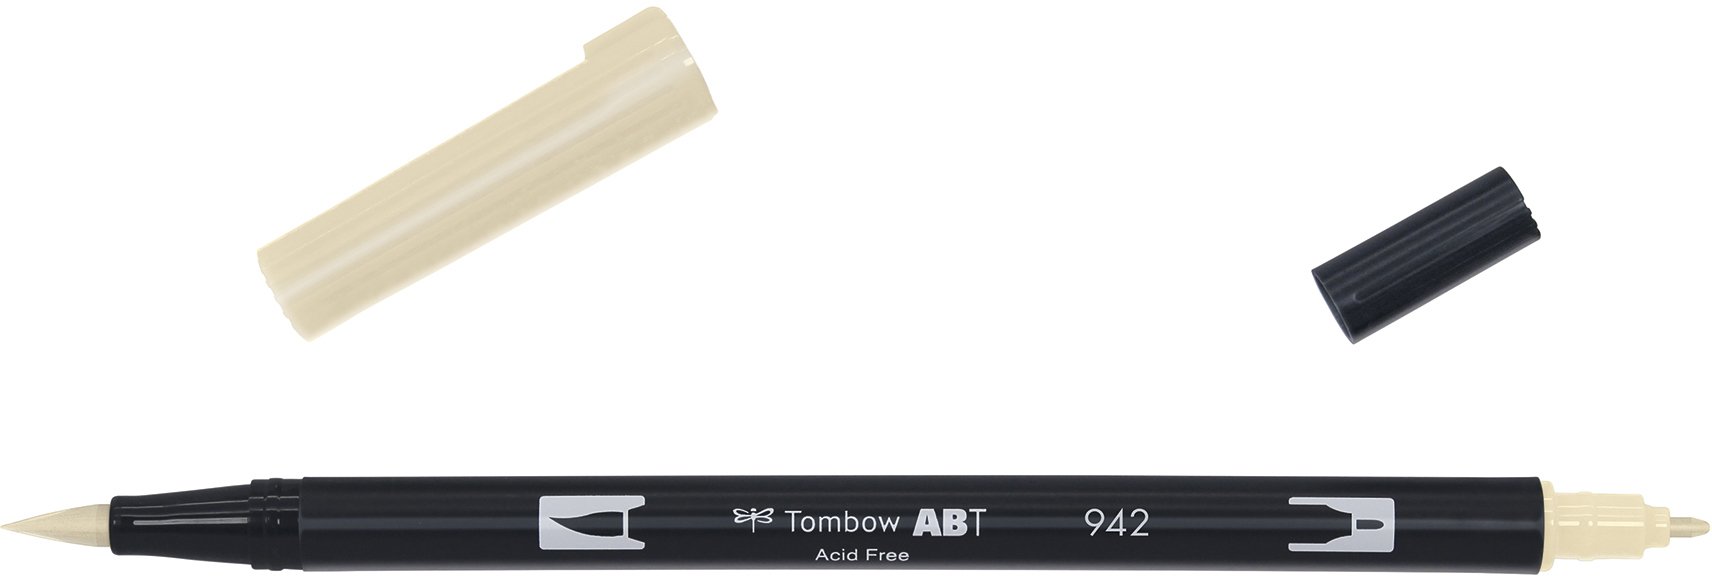 TOMBOW Dual Brush Pen ABT 942 teint